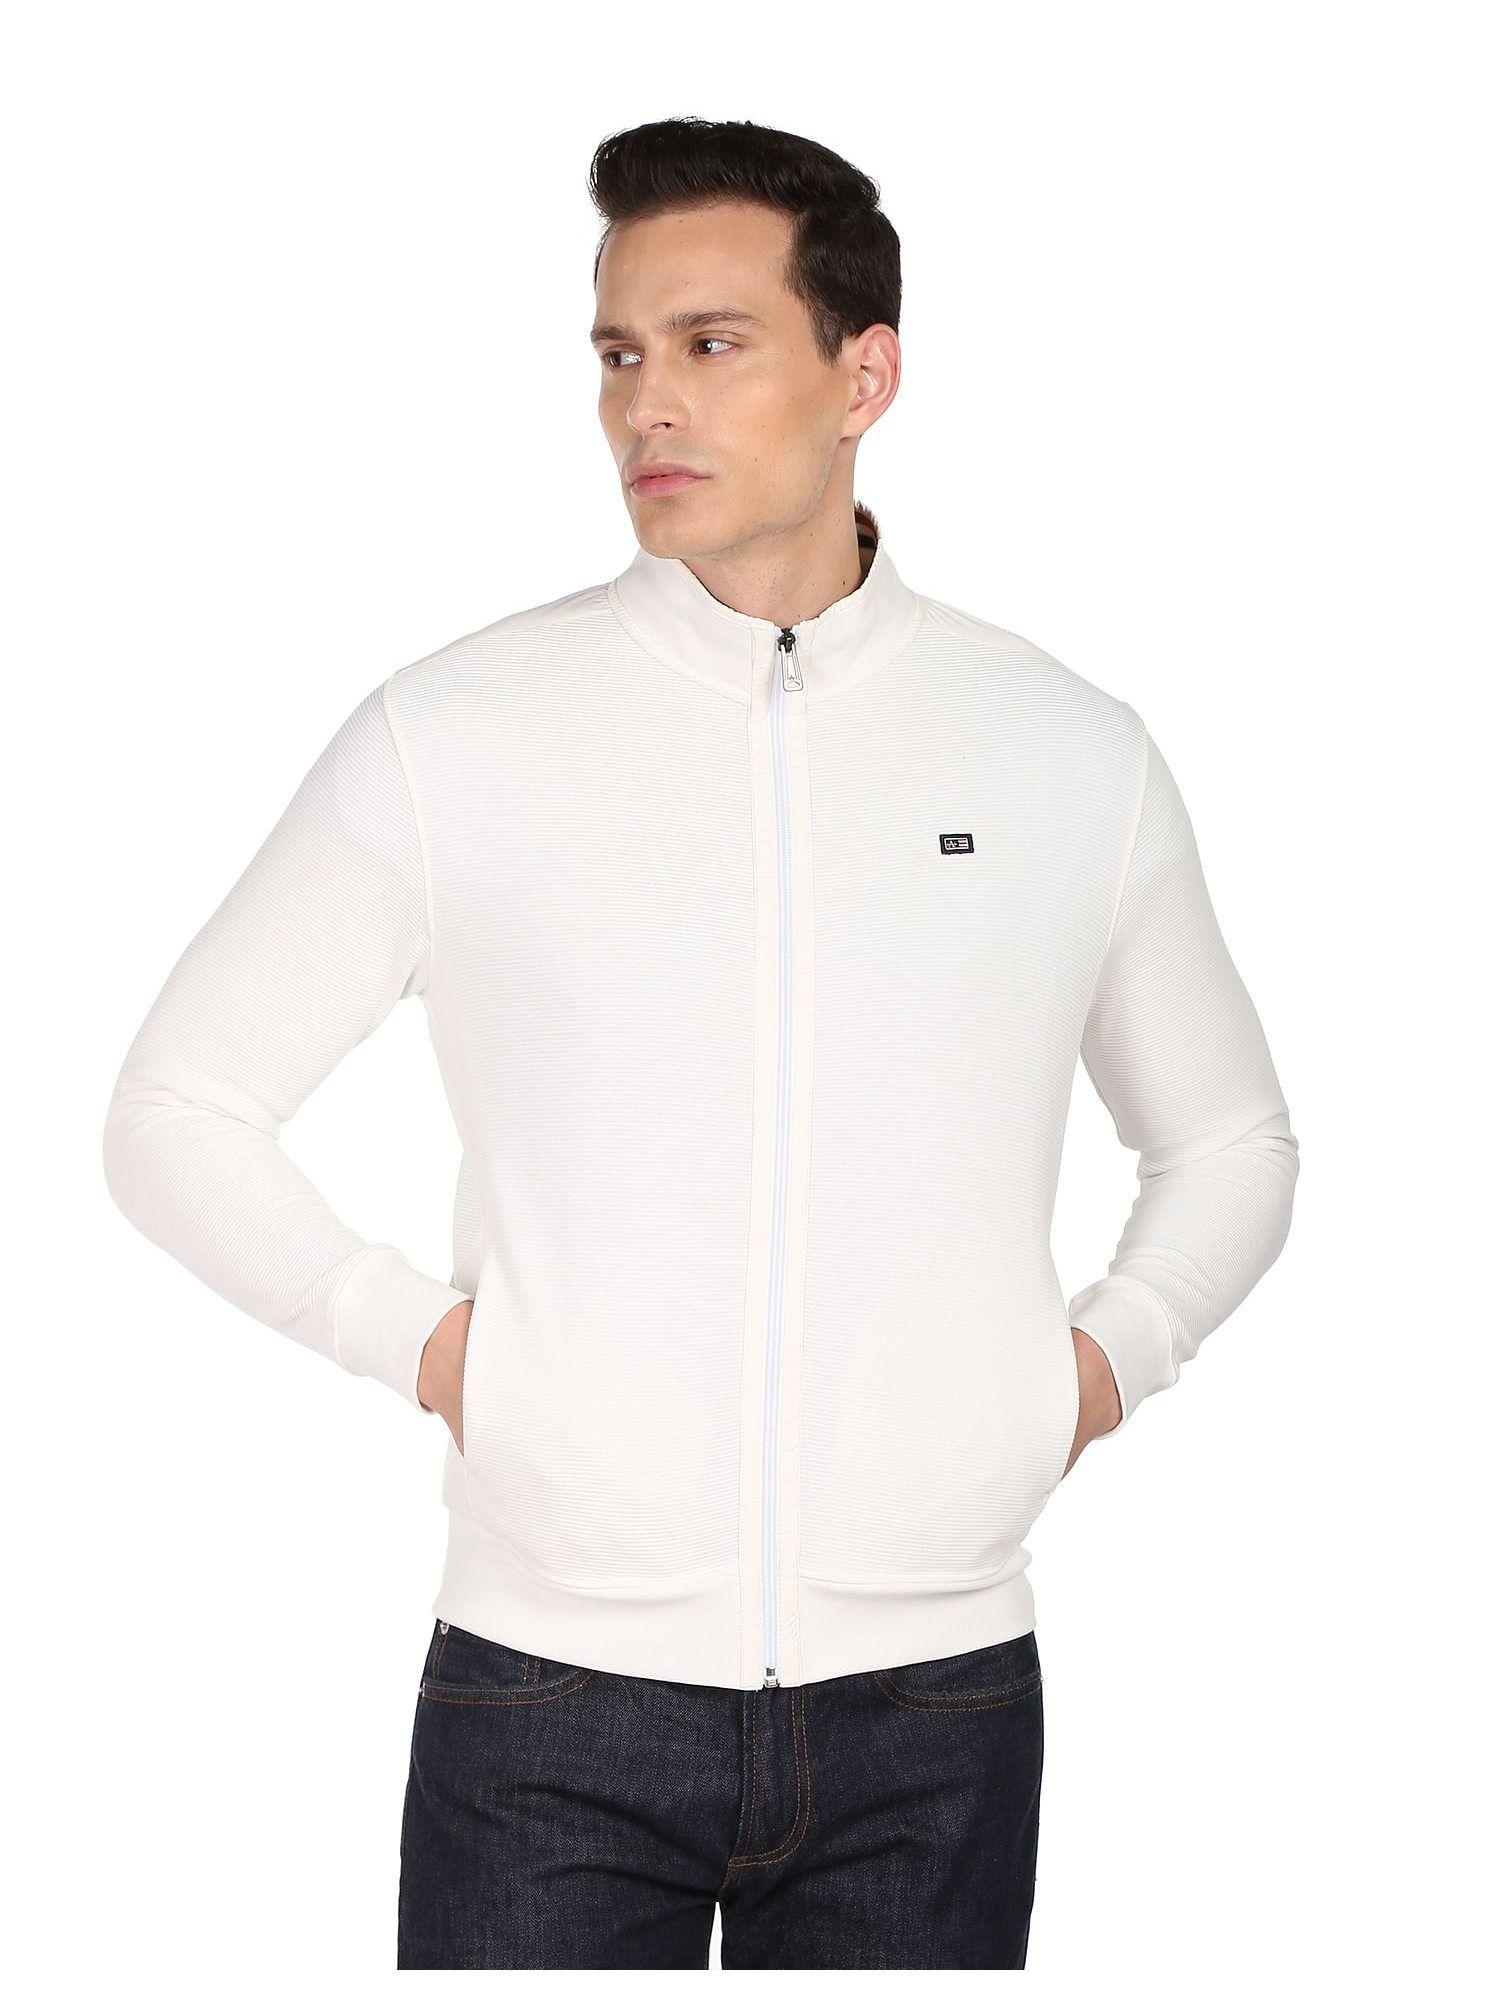 sports-men-off-white-high-neck-rib-knit-solid-jacket